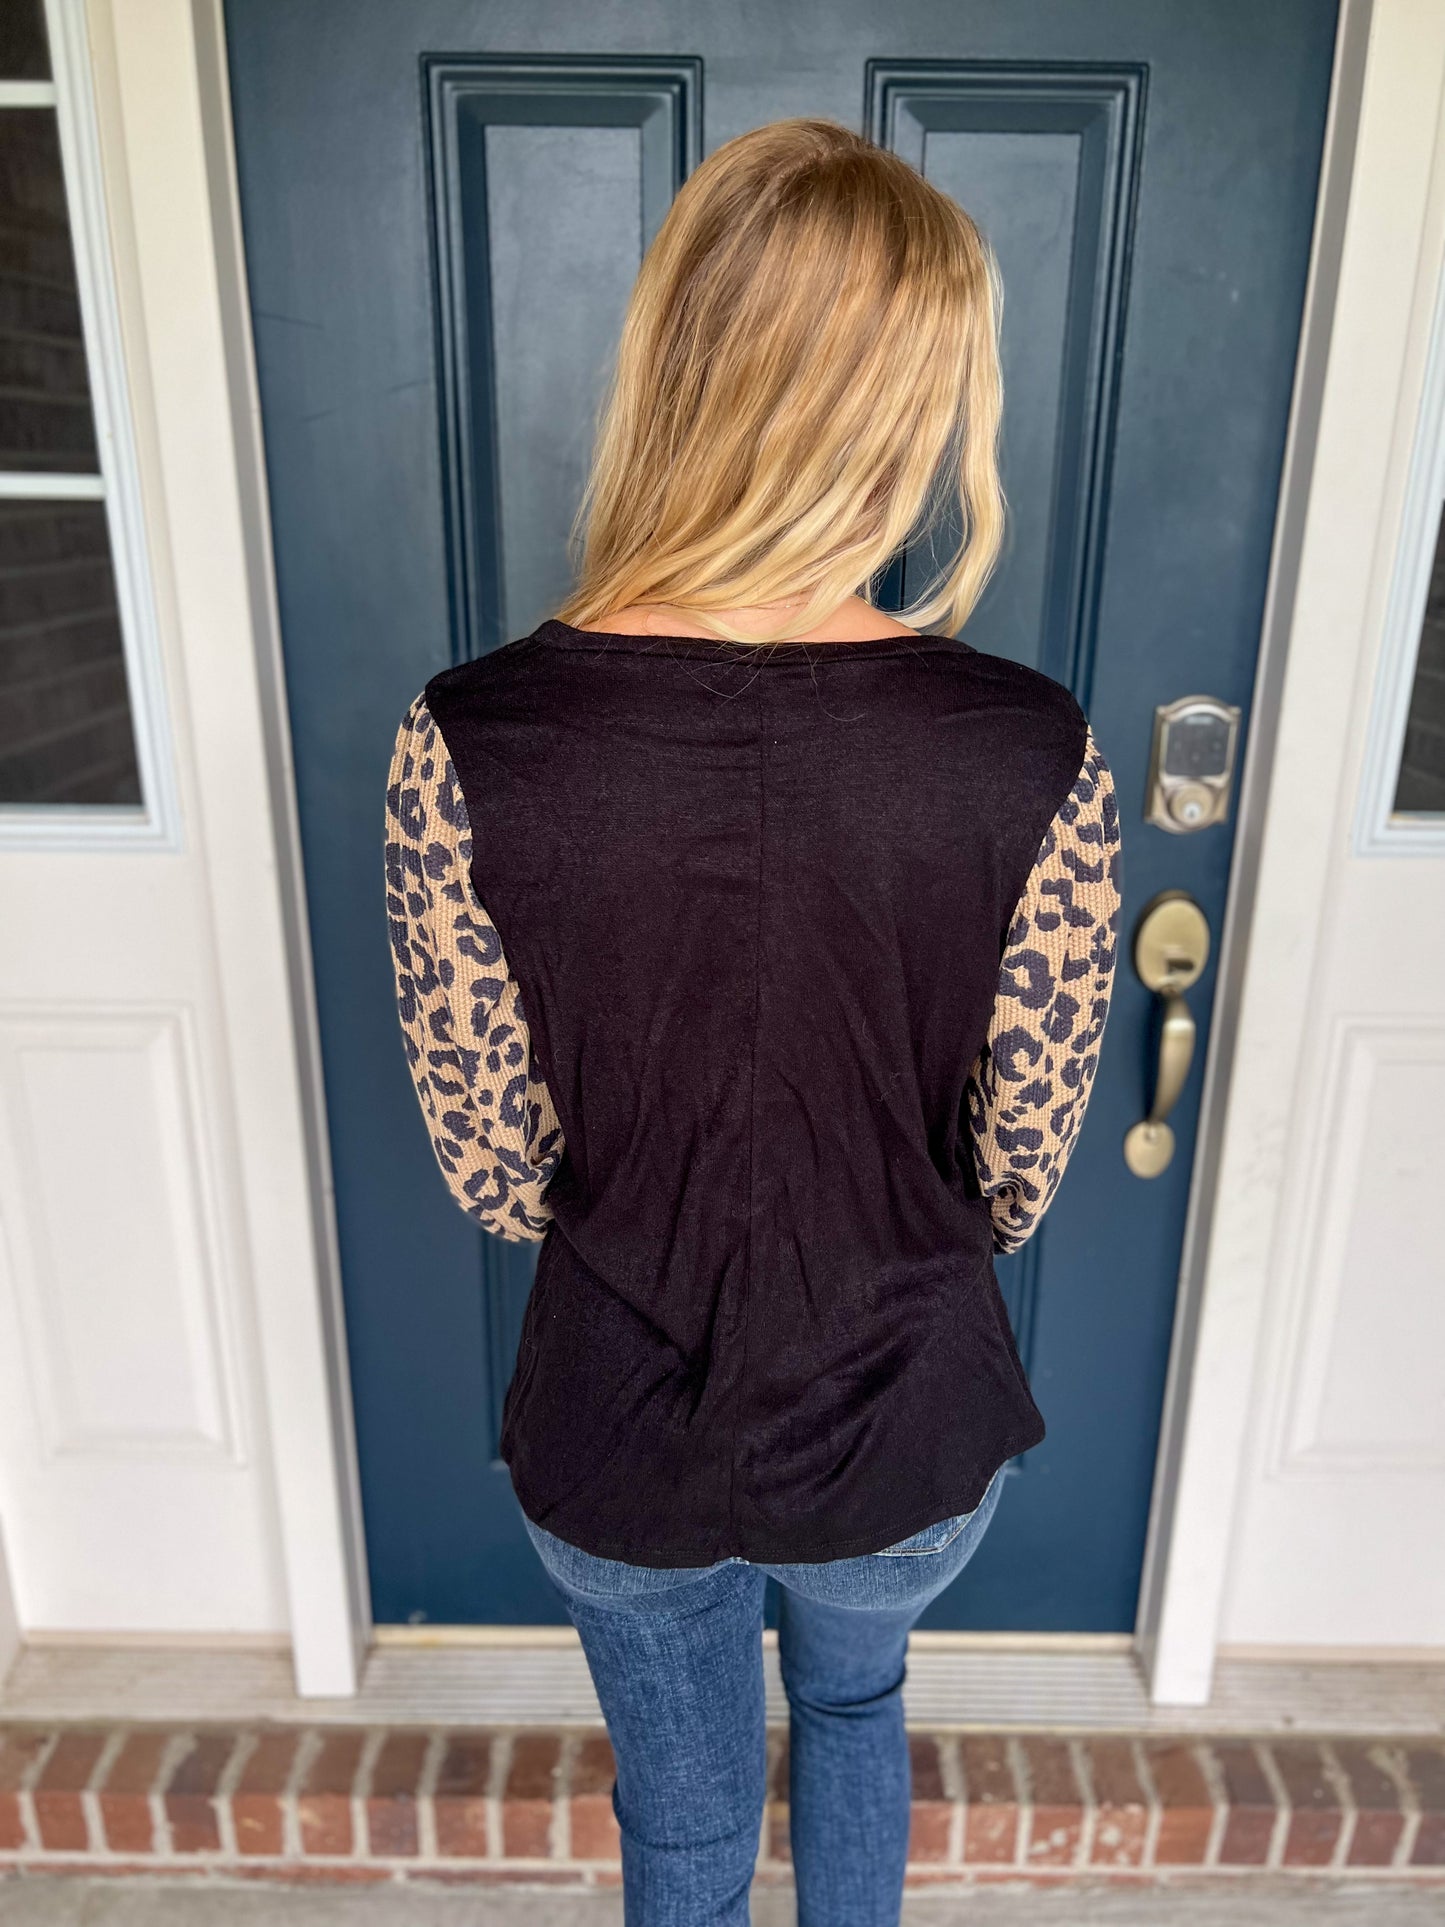 New! Mikayla Black with Animal Print Sleeves Top